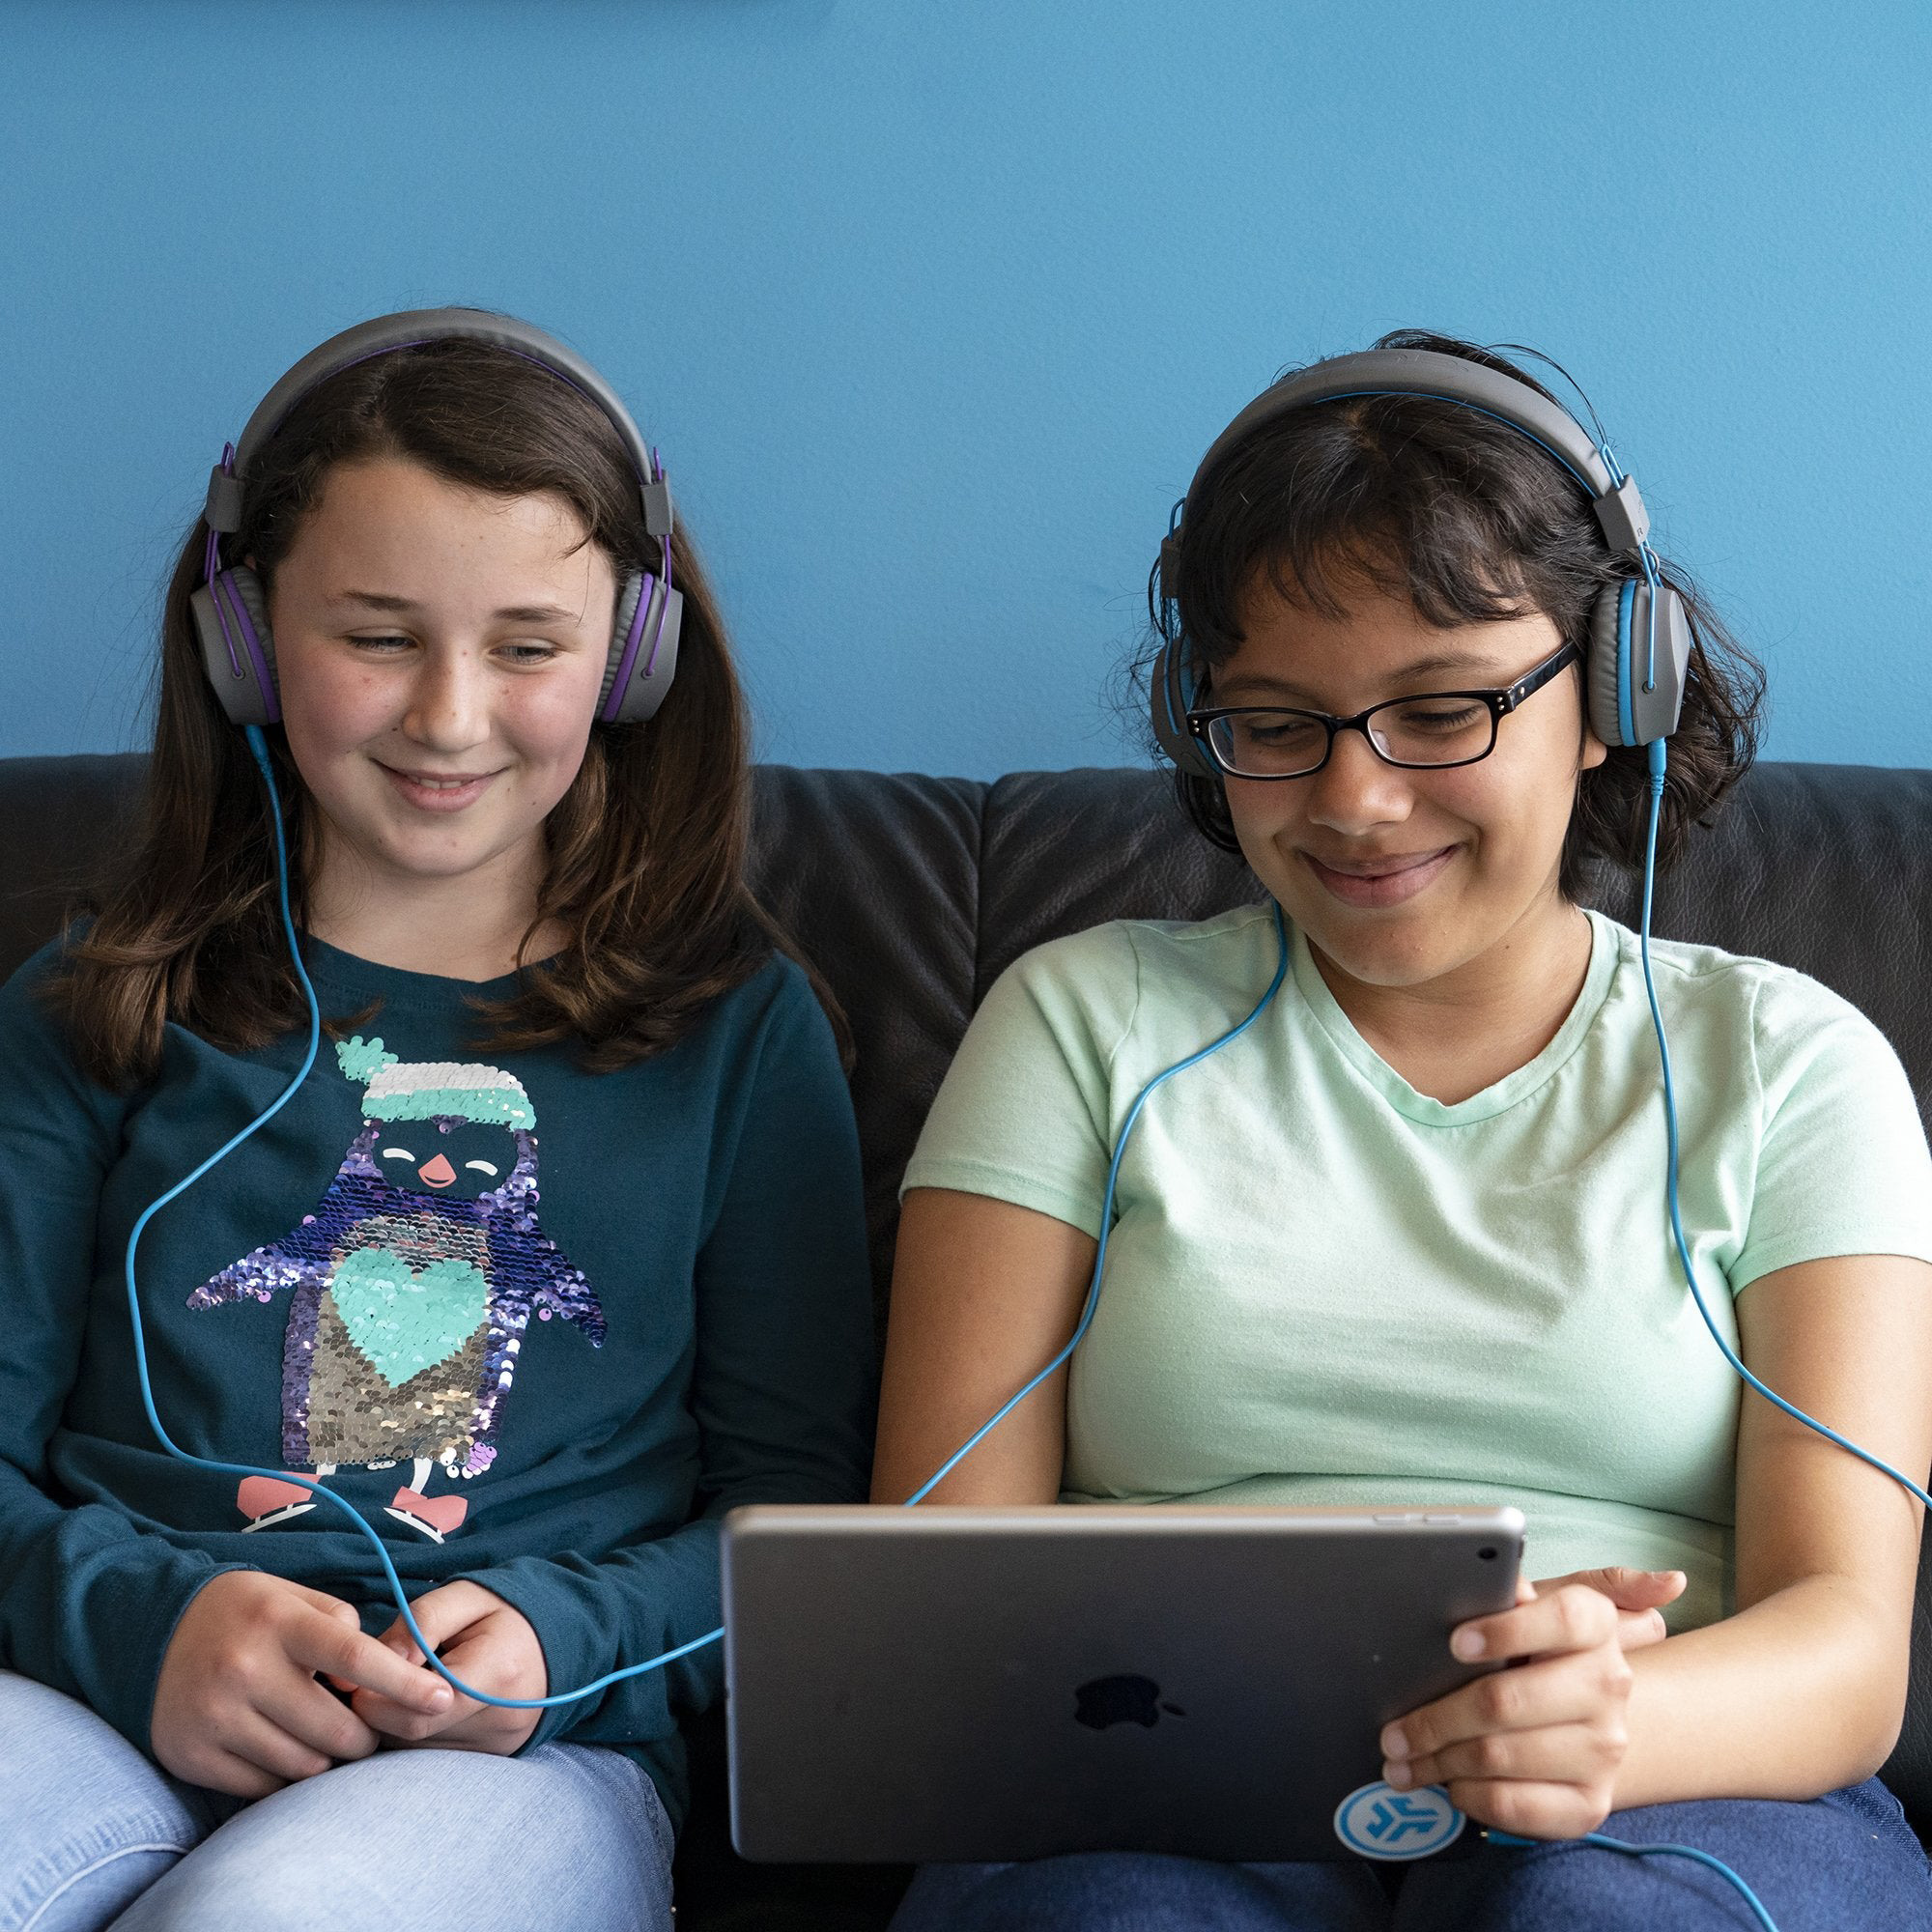 JLAB JBuddies Studio Kids On-Ear IEUHBSTUDIORGRYPRPL4 Wireless, Grey/Purple